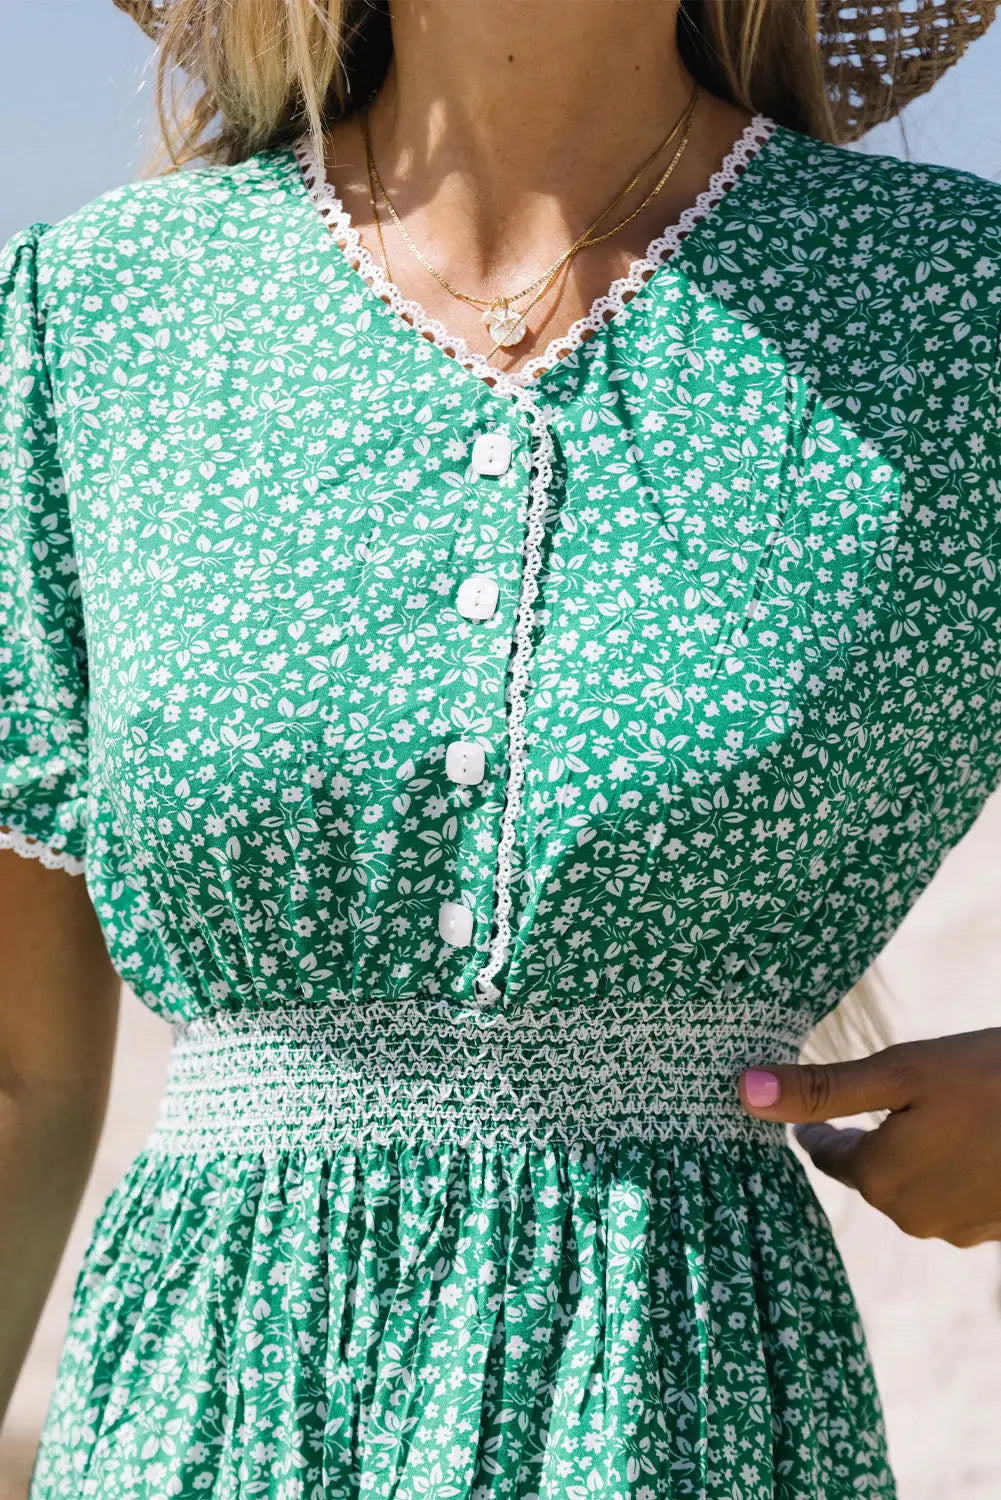 Green floral print lace splicing flared high waist midi dress - dresses